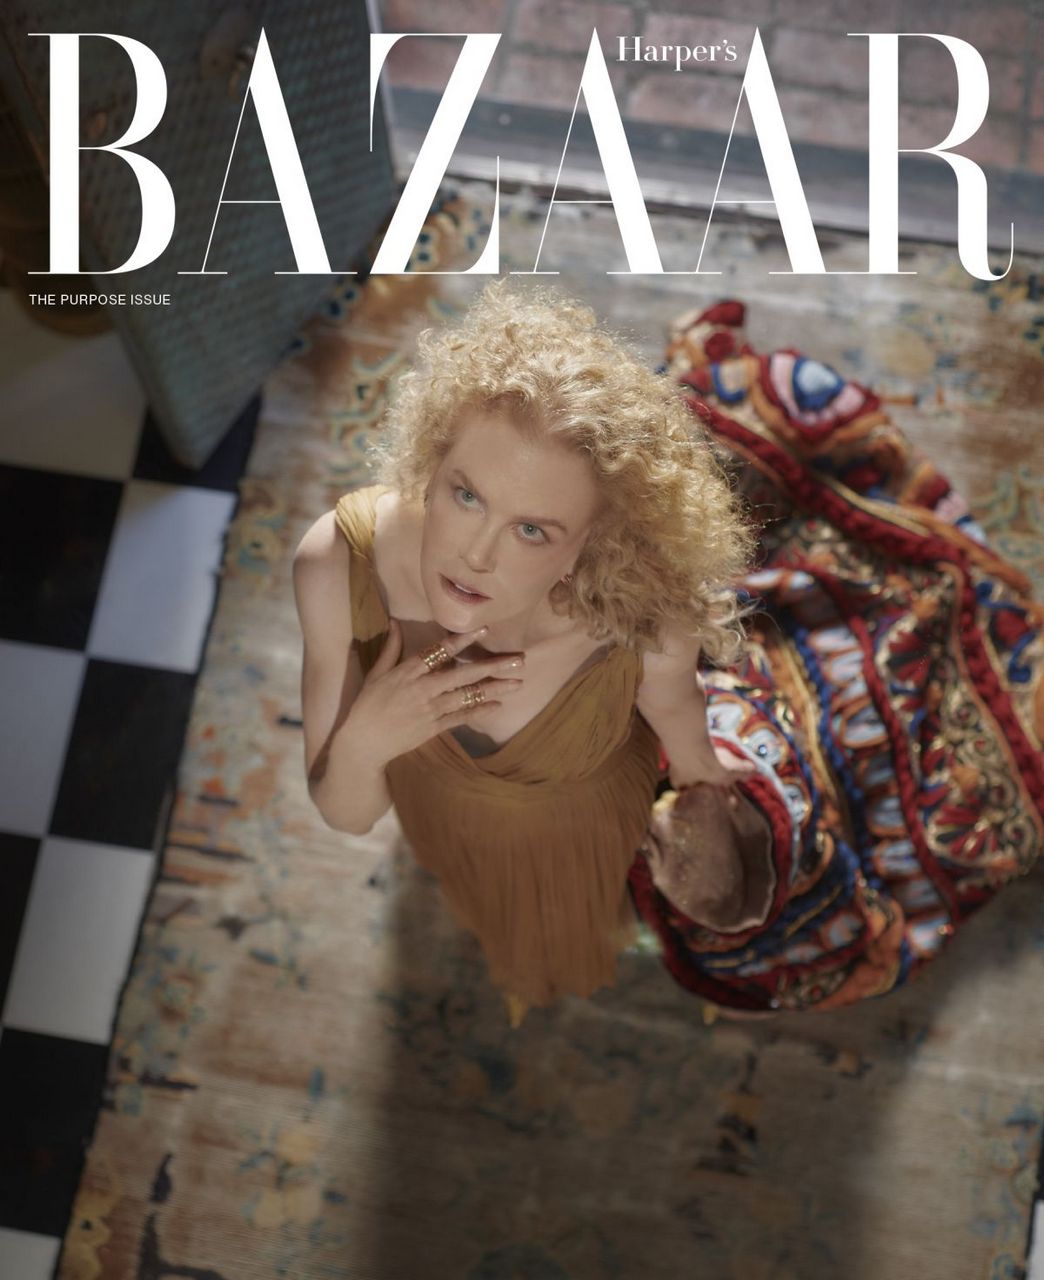 Nicole Kidman Harper S Bazaar Magazine The Purpose Issue September